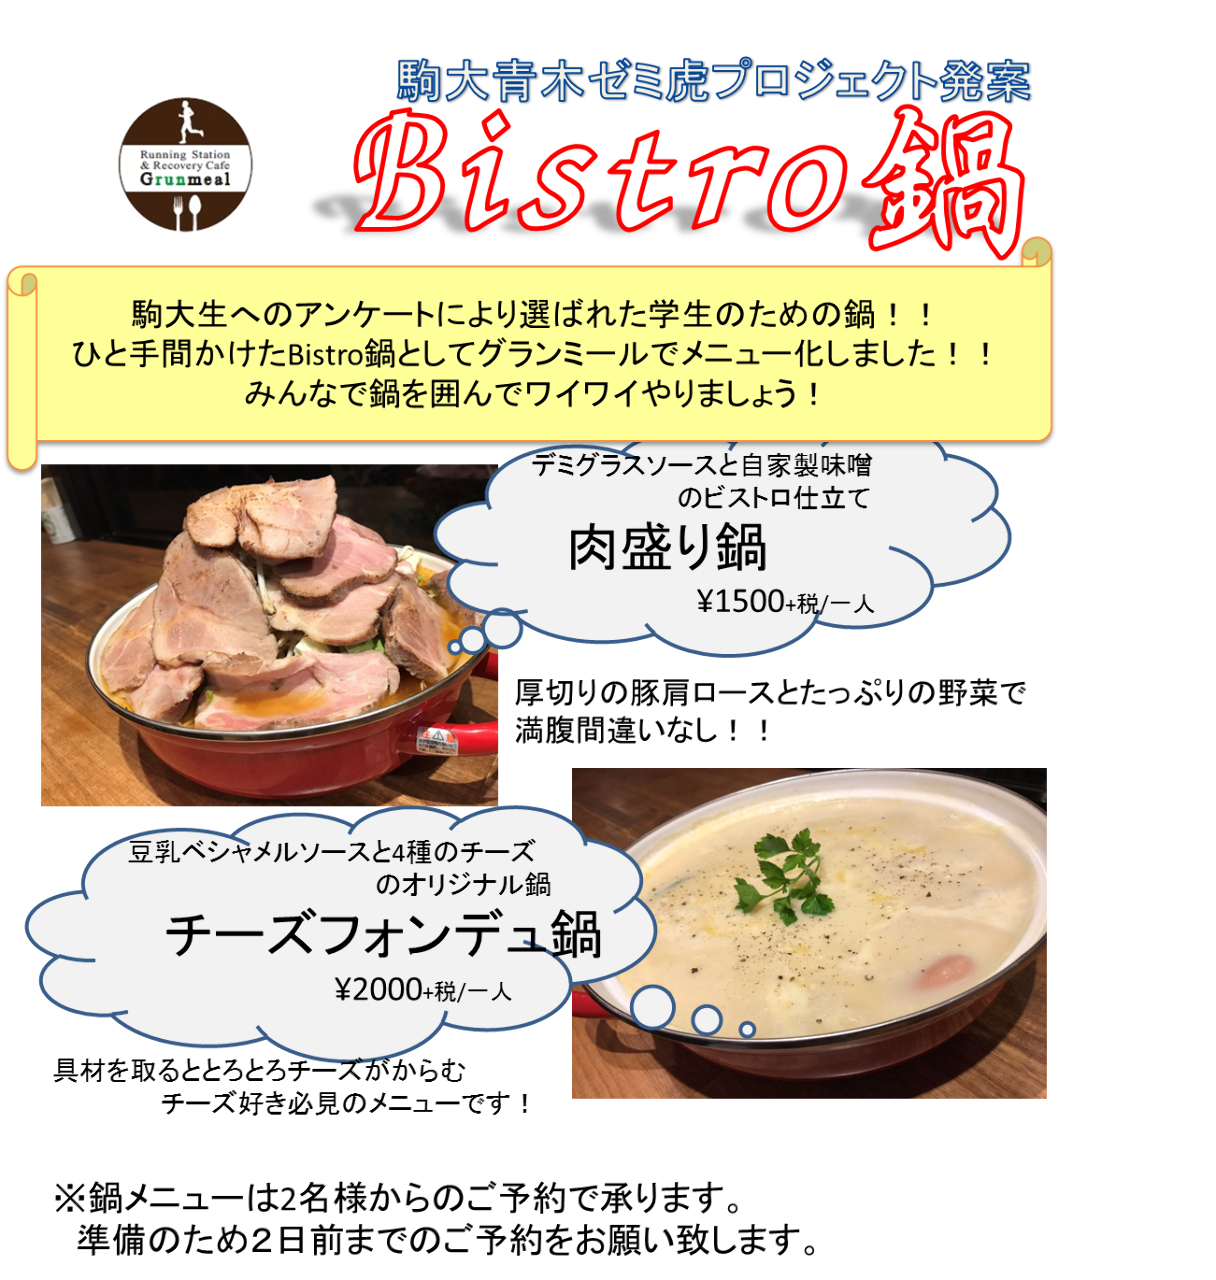 Running Station Recovery Cafe Grunmeal 駒沢公園 コース Bistro鍋 豆乳ベシャメルソースと4種のチーズの チーズフォンデュ鍋コース ぐるなび